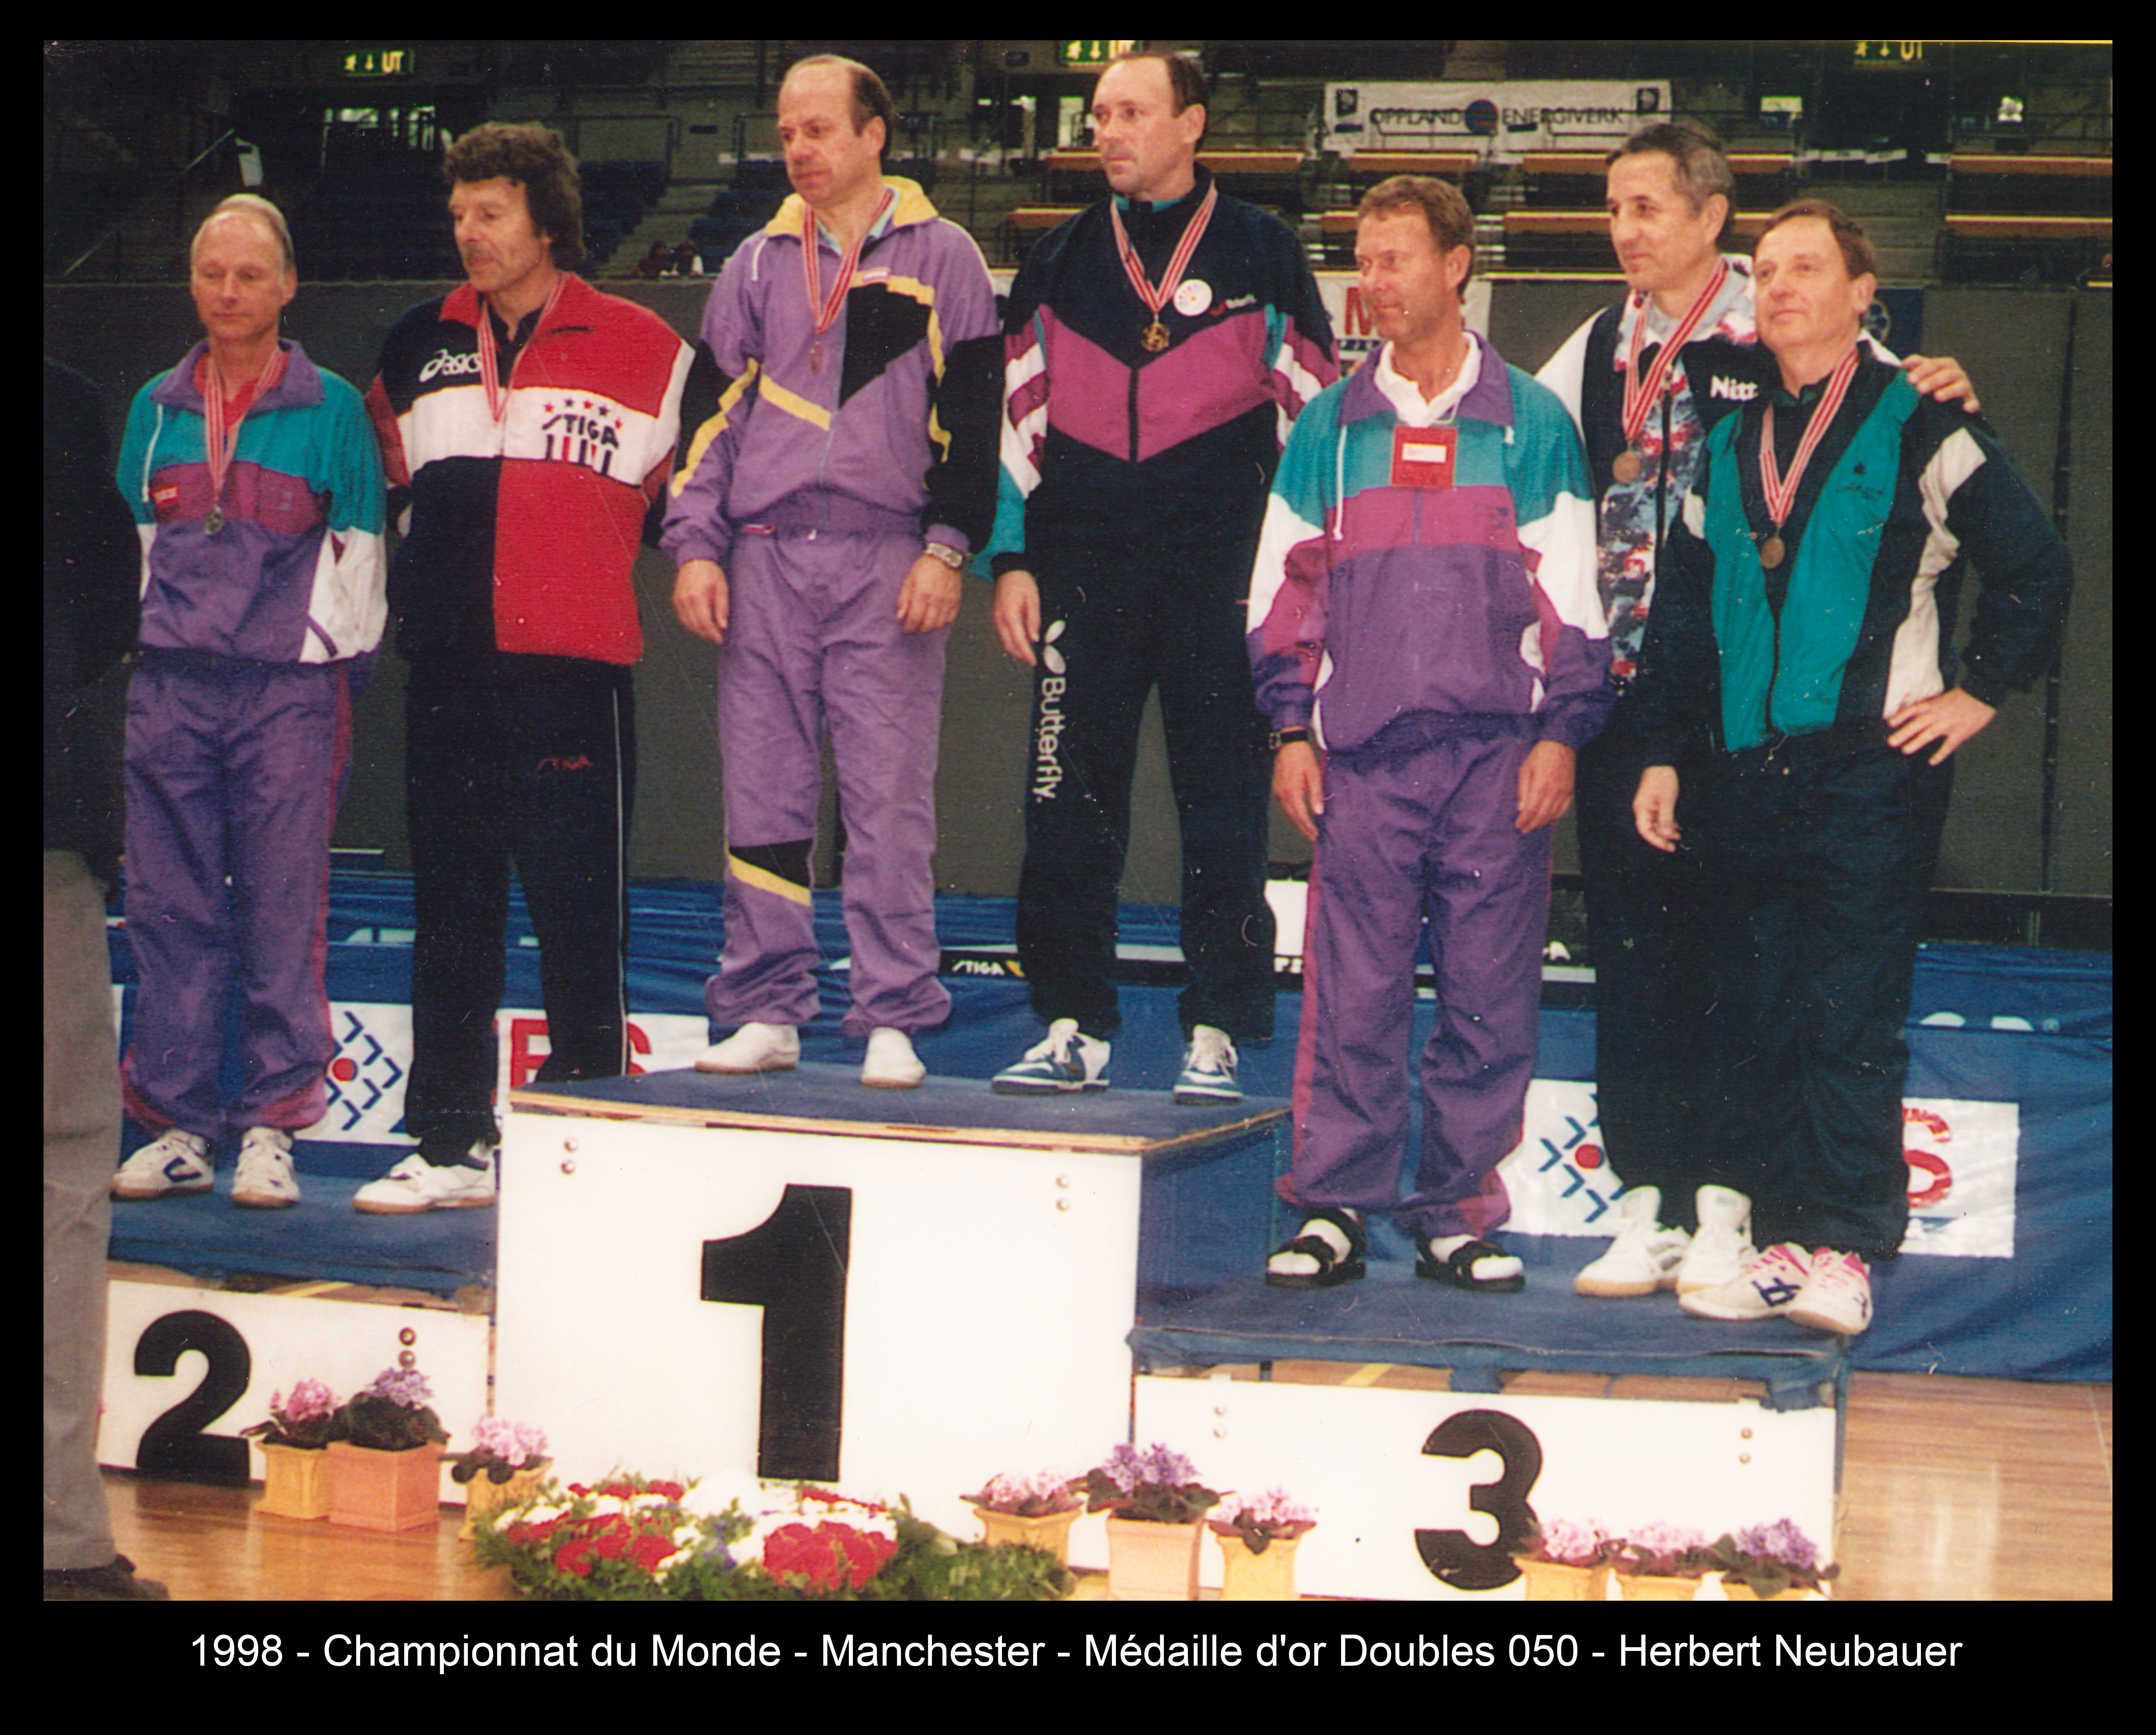 1996 - Championnat du Monde -  Lillehamer - Médaille d'argent Doubles 050 - Herbert Neubauer